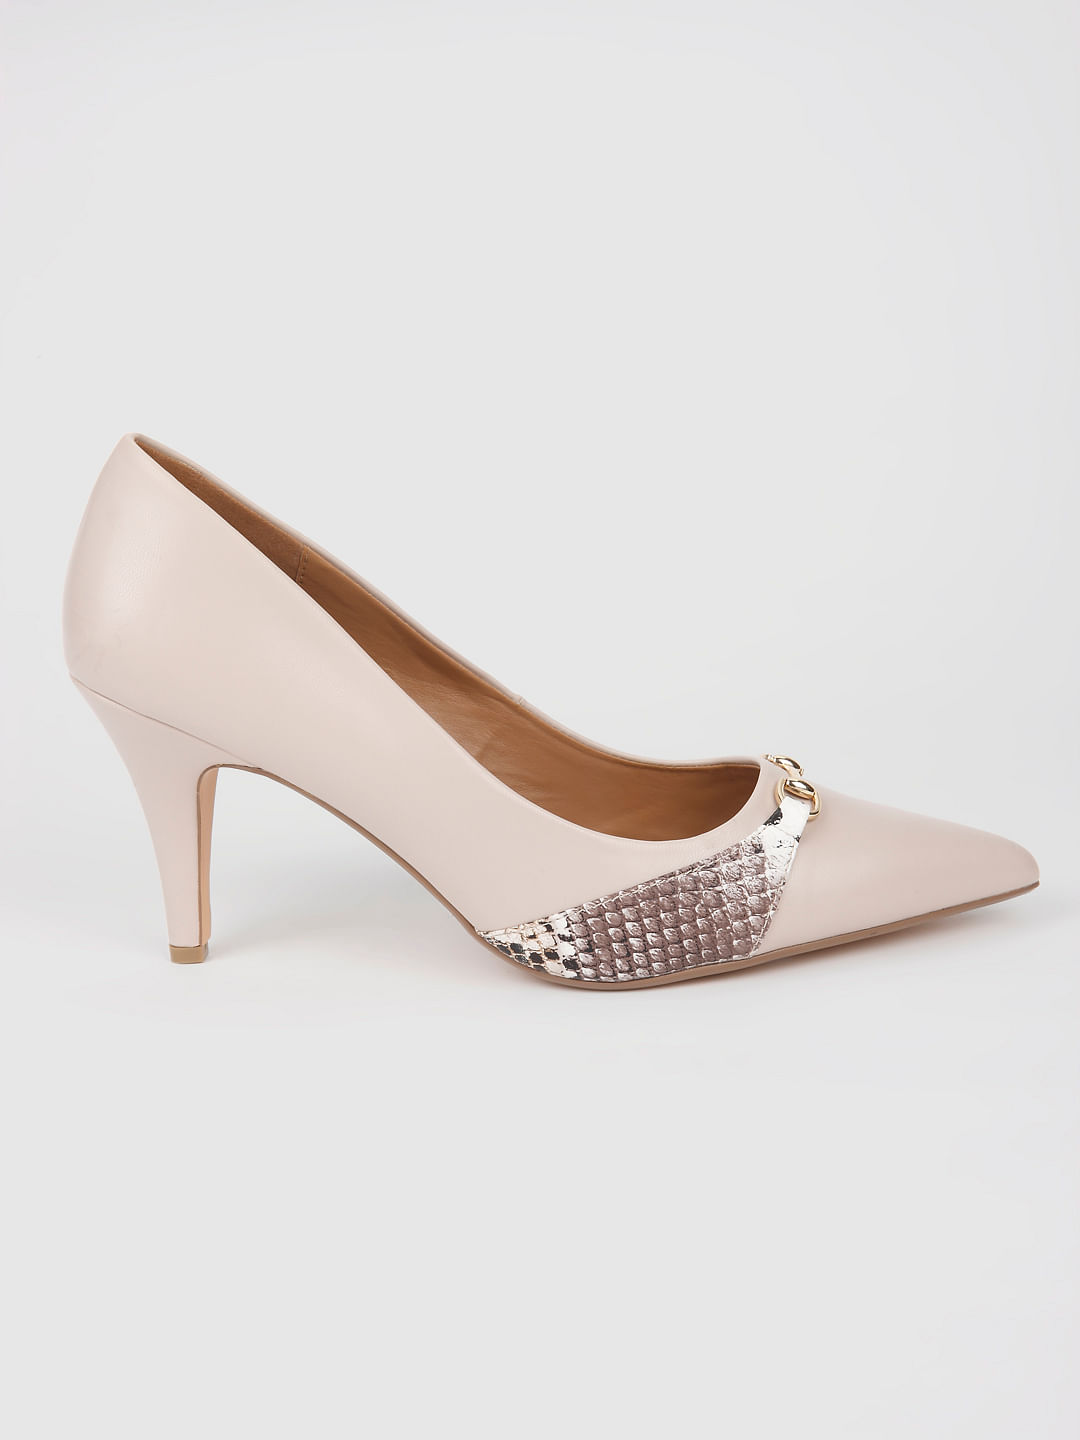 light pink stiletto heels